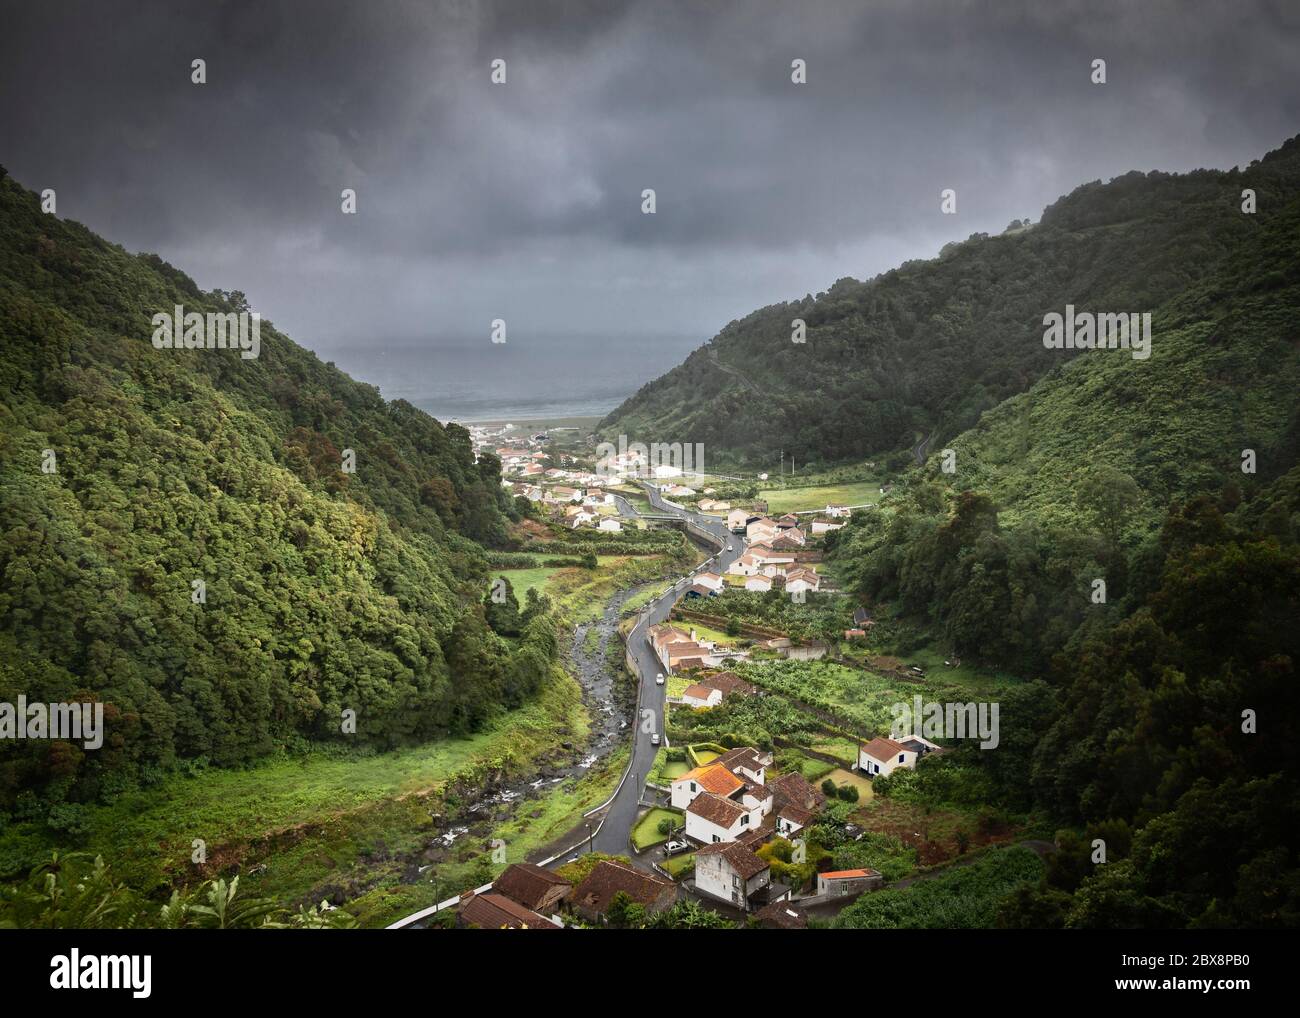 Moody Meteo su una valle a Sao Miguel, Isole Azzorre Foto Stock